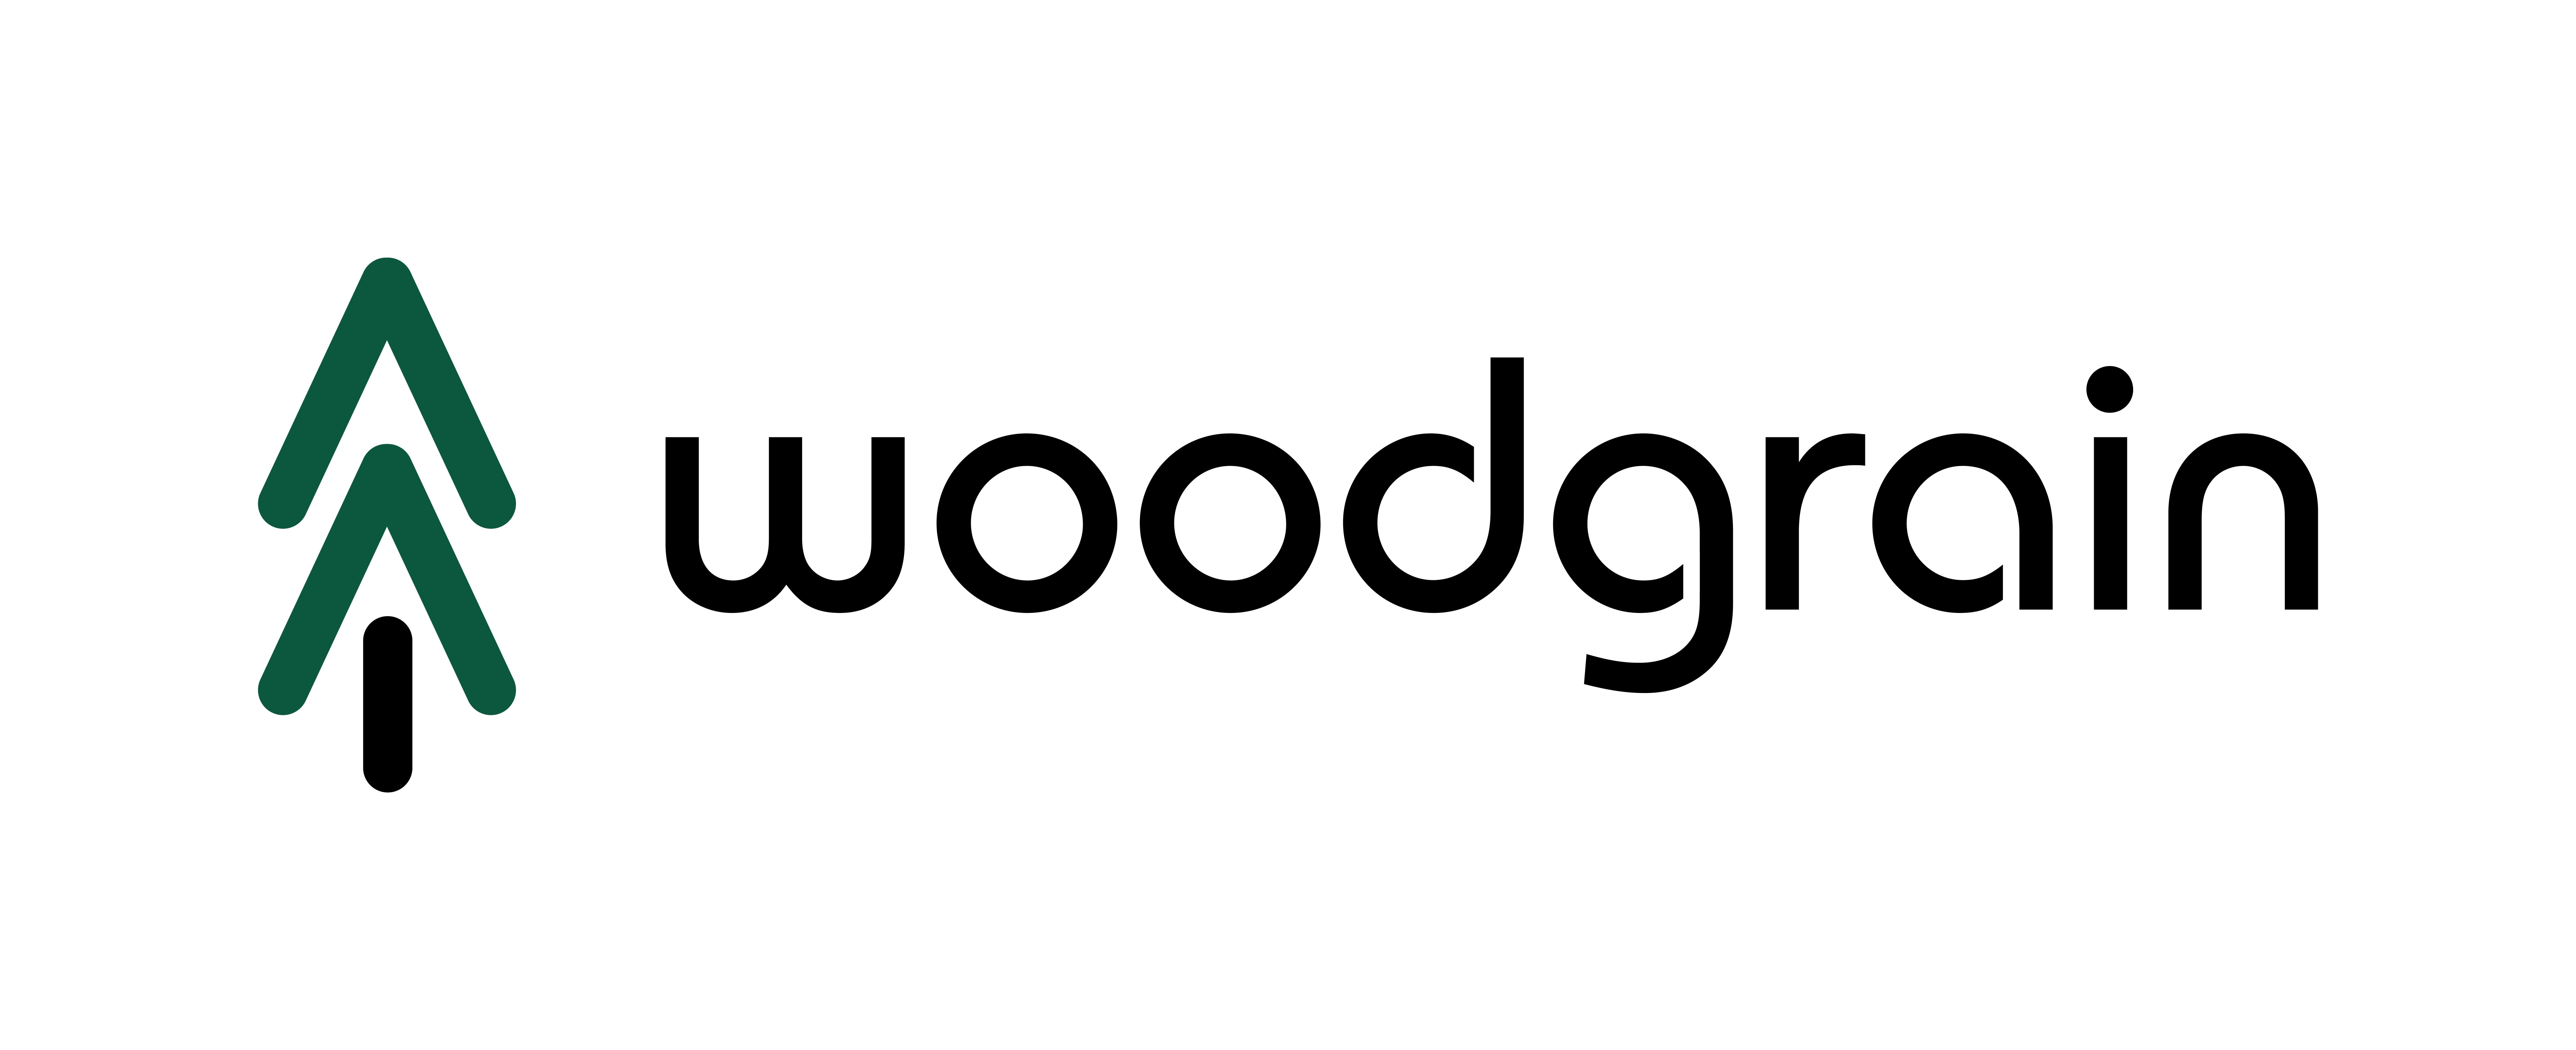 Woodgrain Full Color Logo